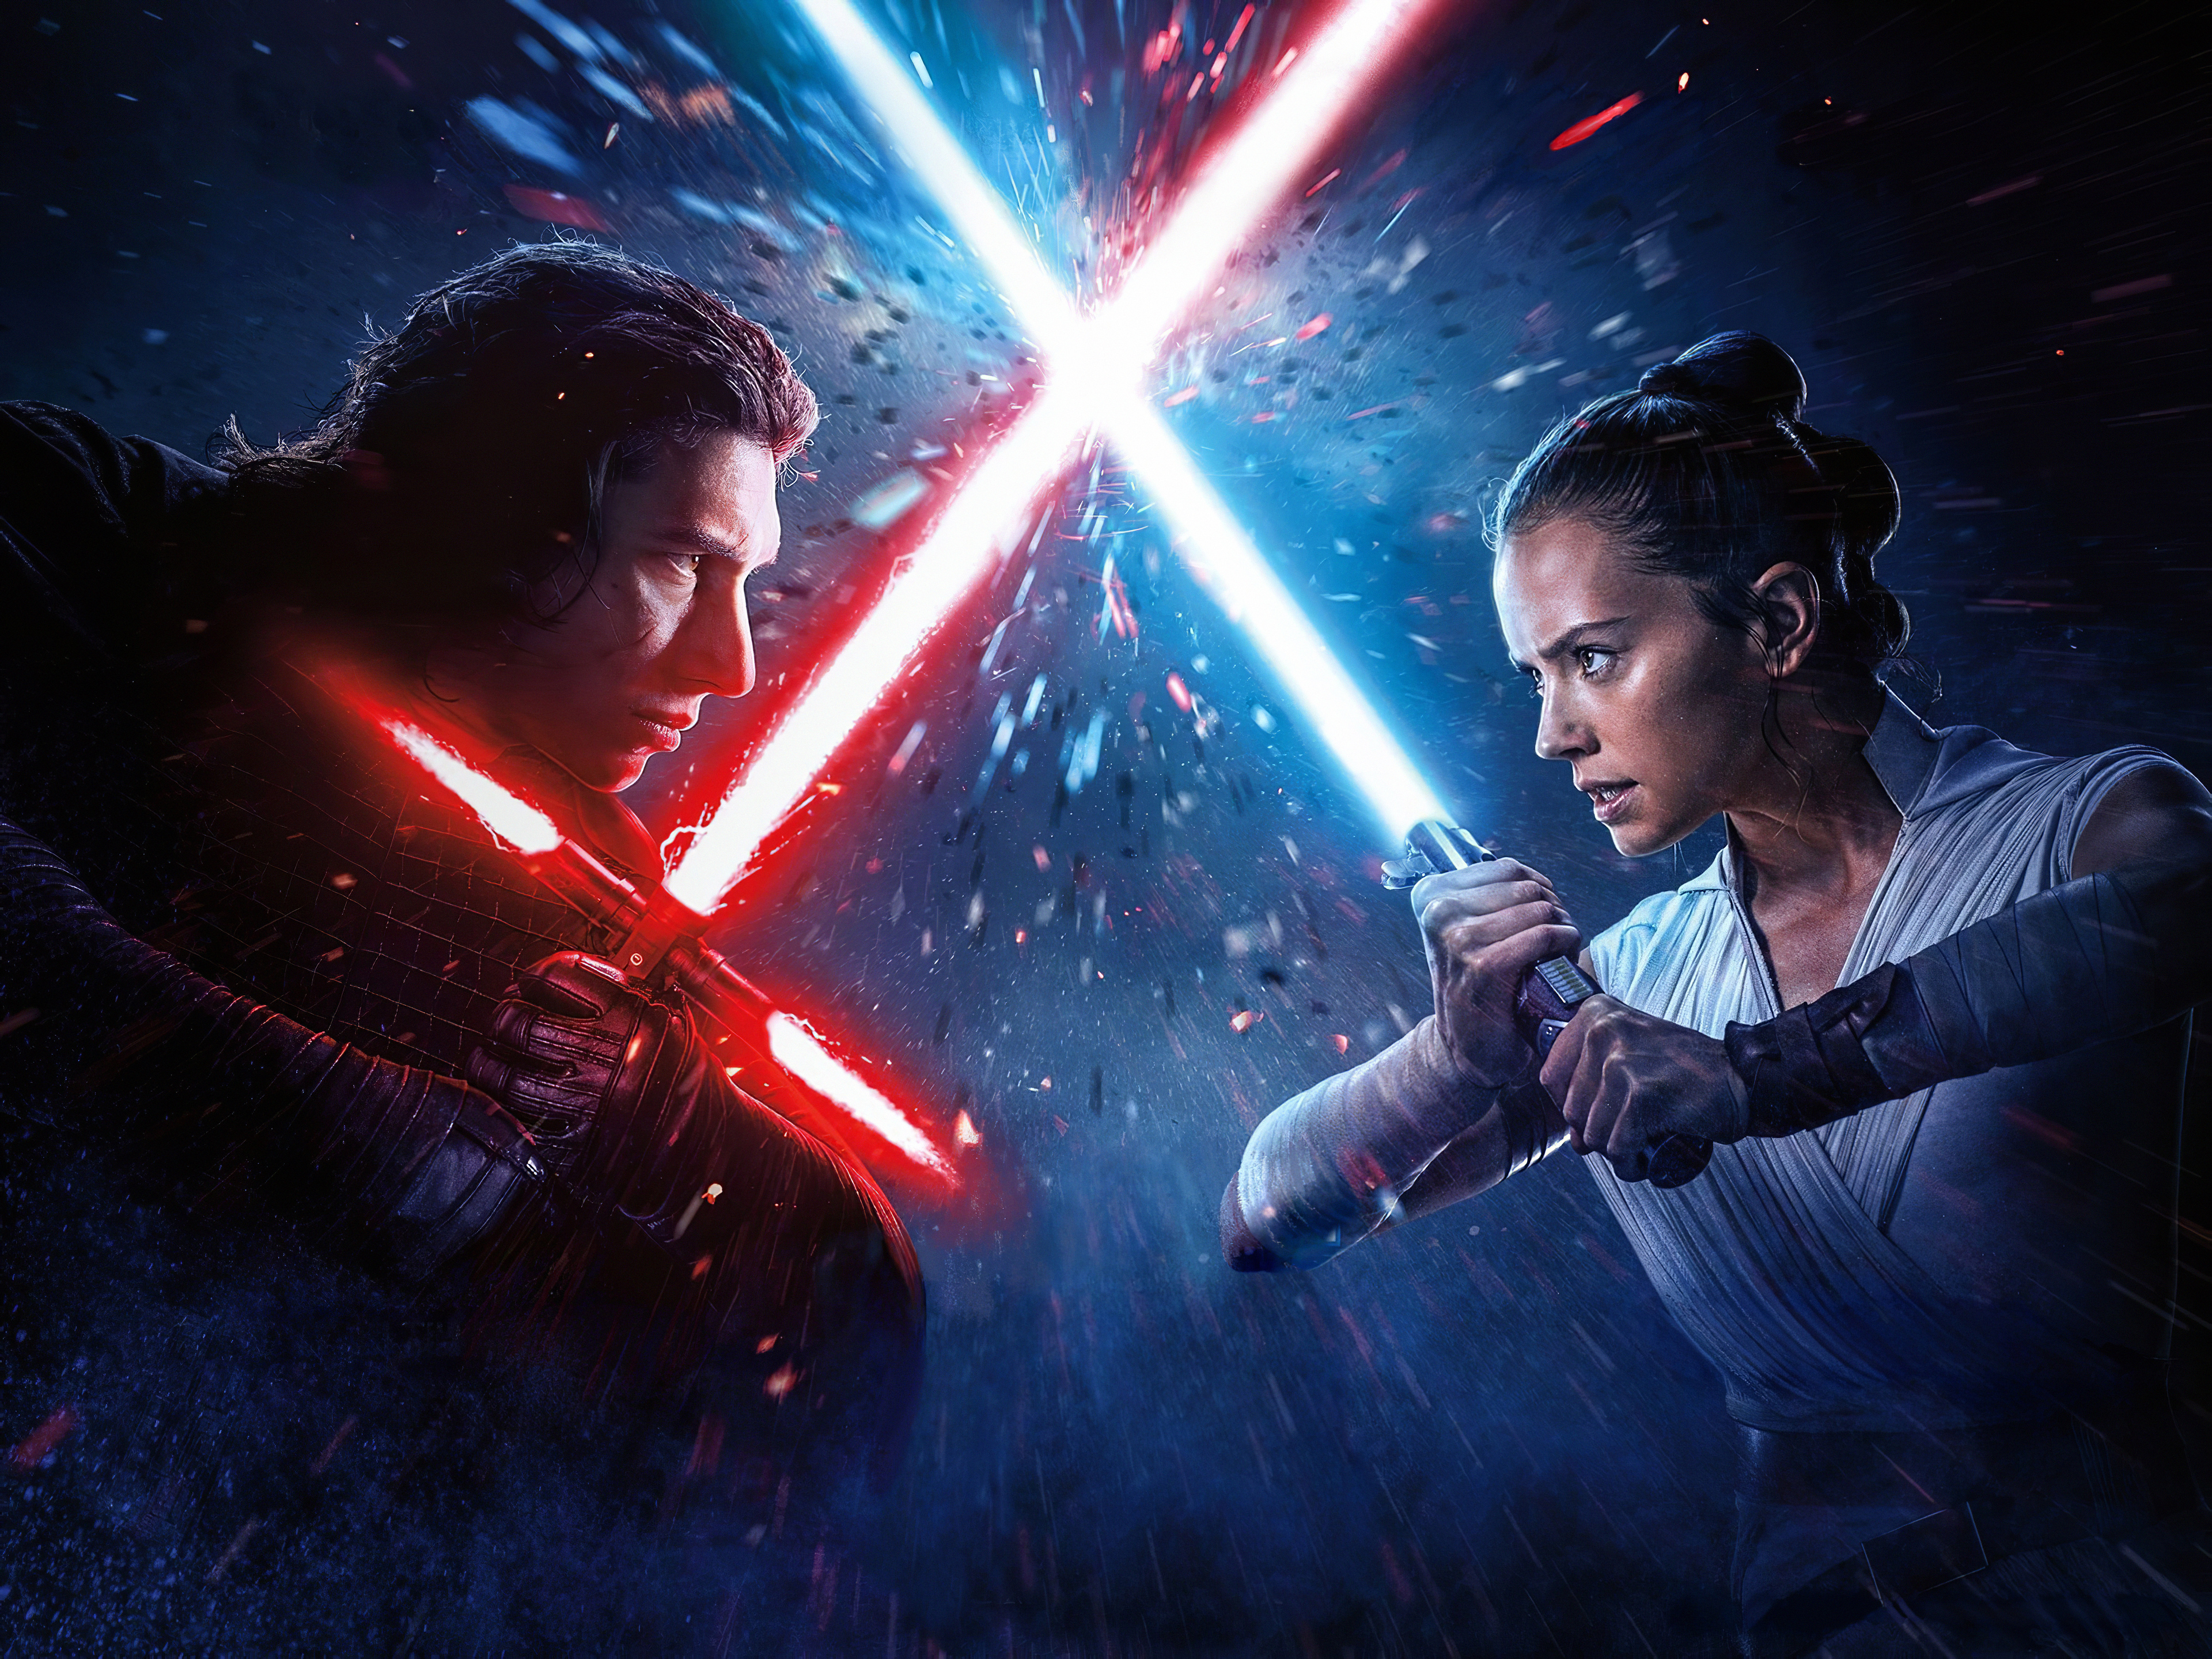 2019 Star Wars: The Rise Of Skywalker